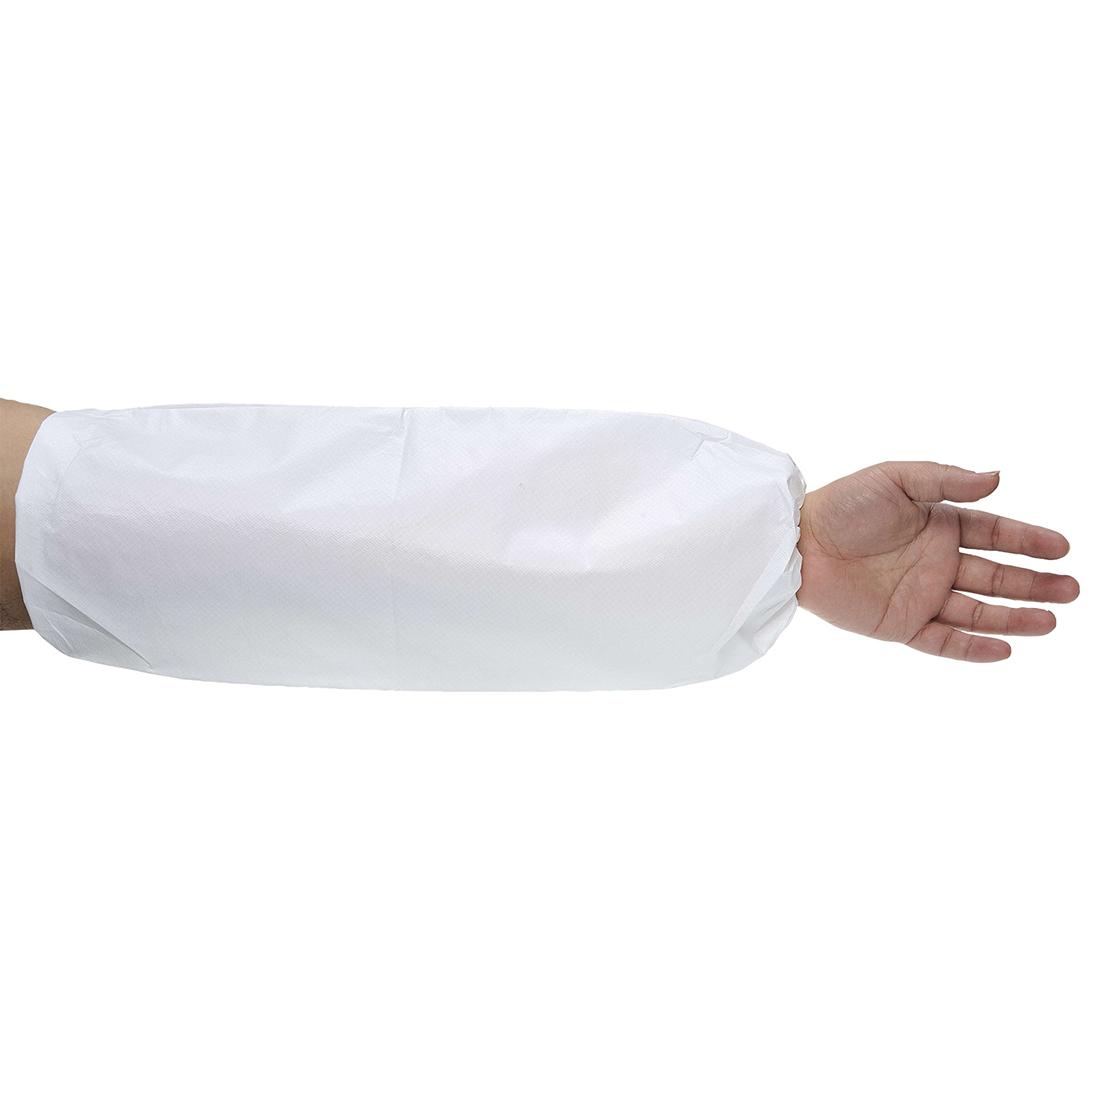 BizTex Microporous Sleeve Cover Type PB[6] - White